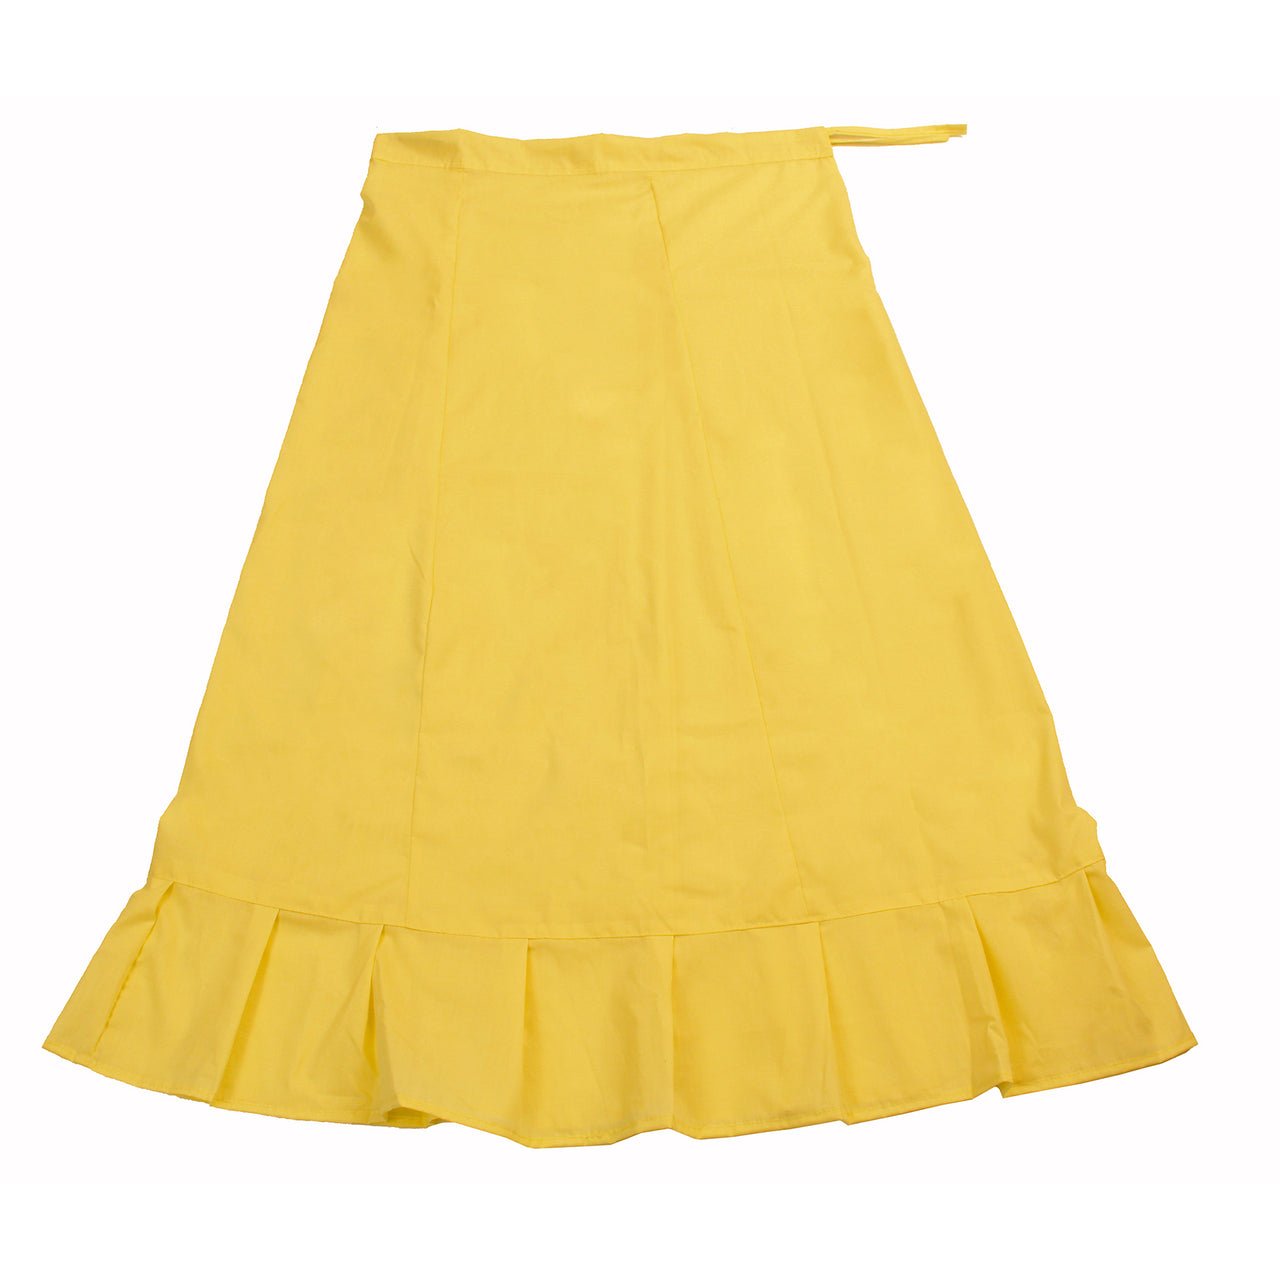 Lemon - Sari (Saree) Petticoat - Available in S, M, L & XL - Underskirts For Sari's